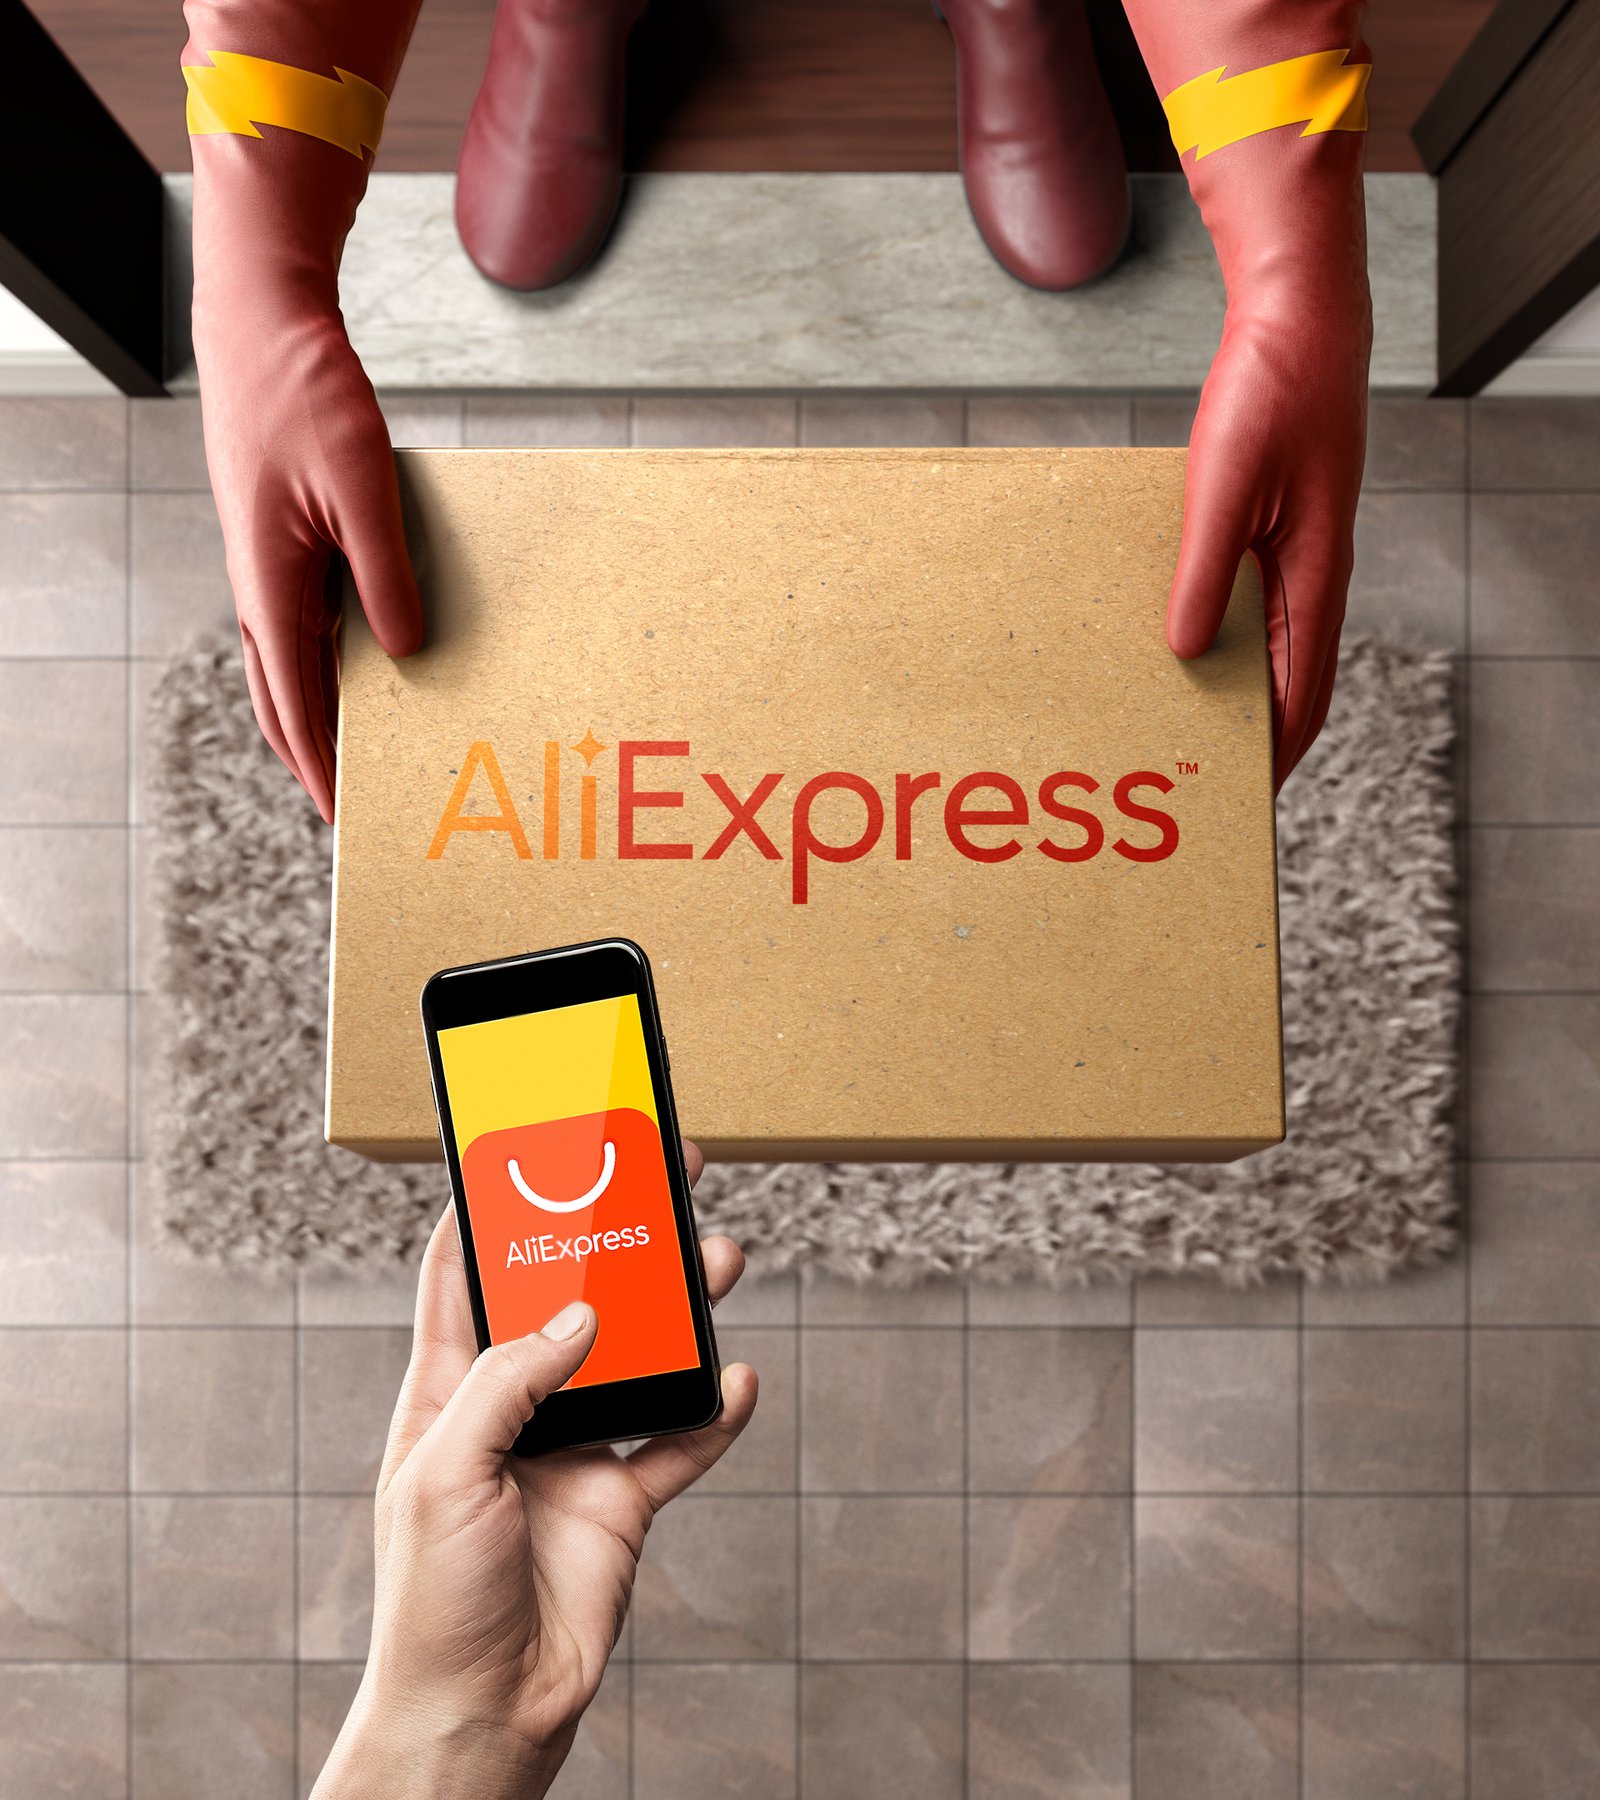 Ali Express - Apressadinhos